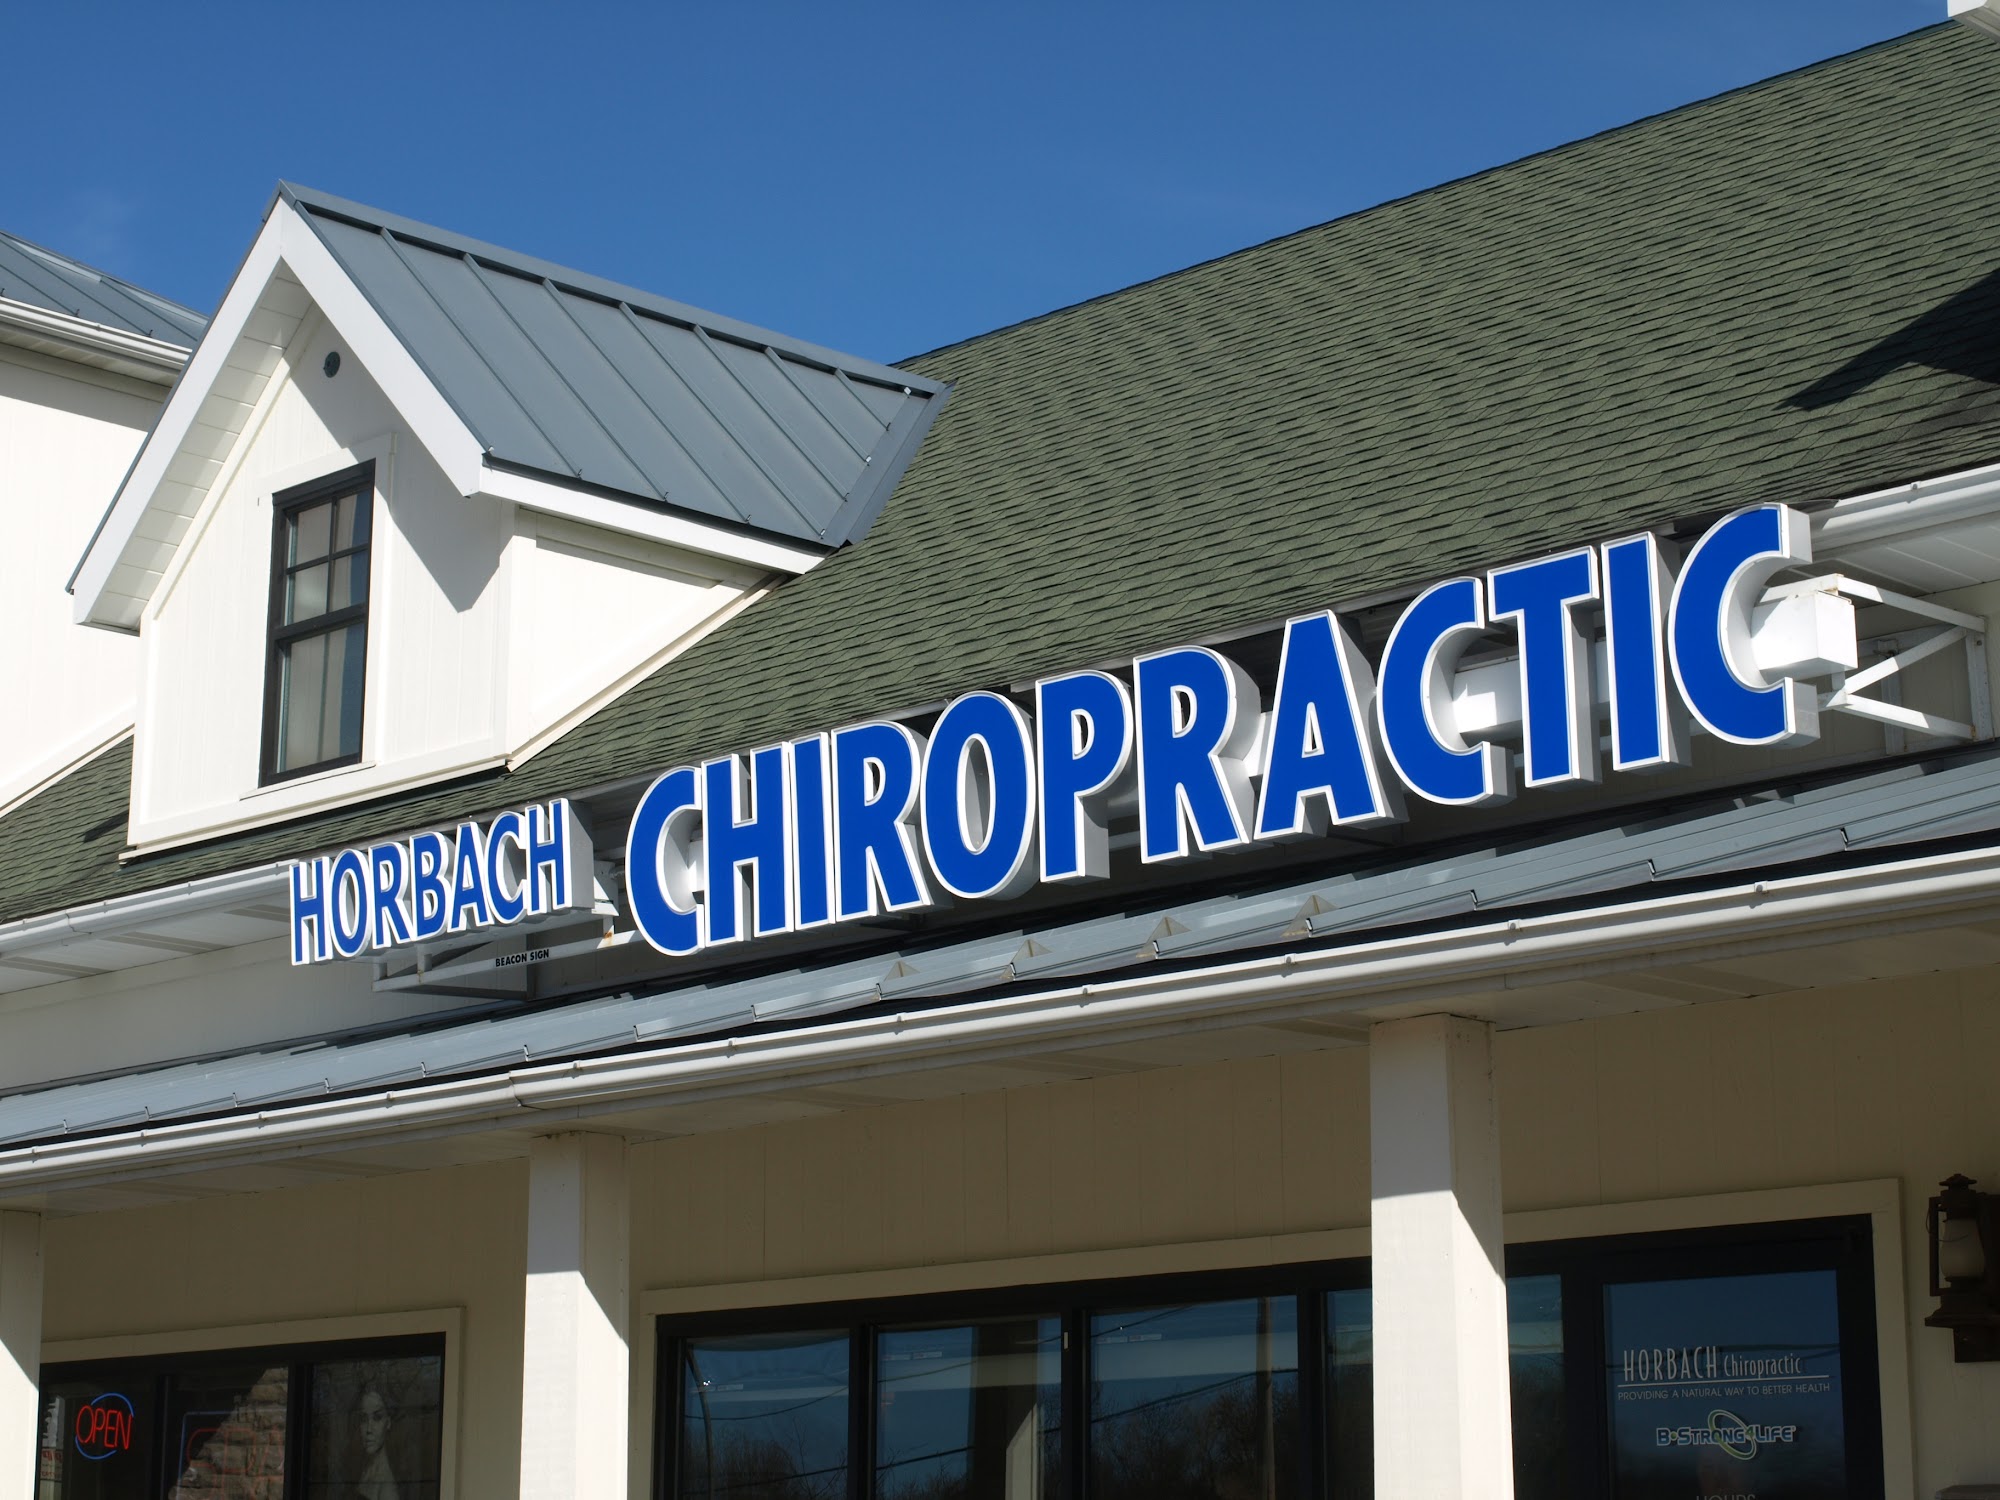 Horbach Chiropractic LLC